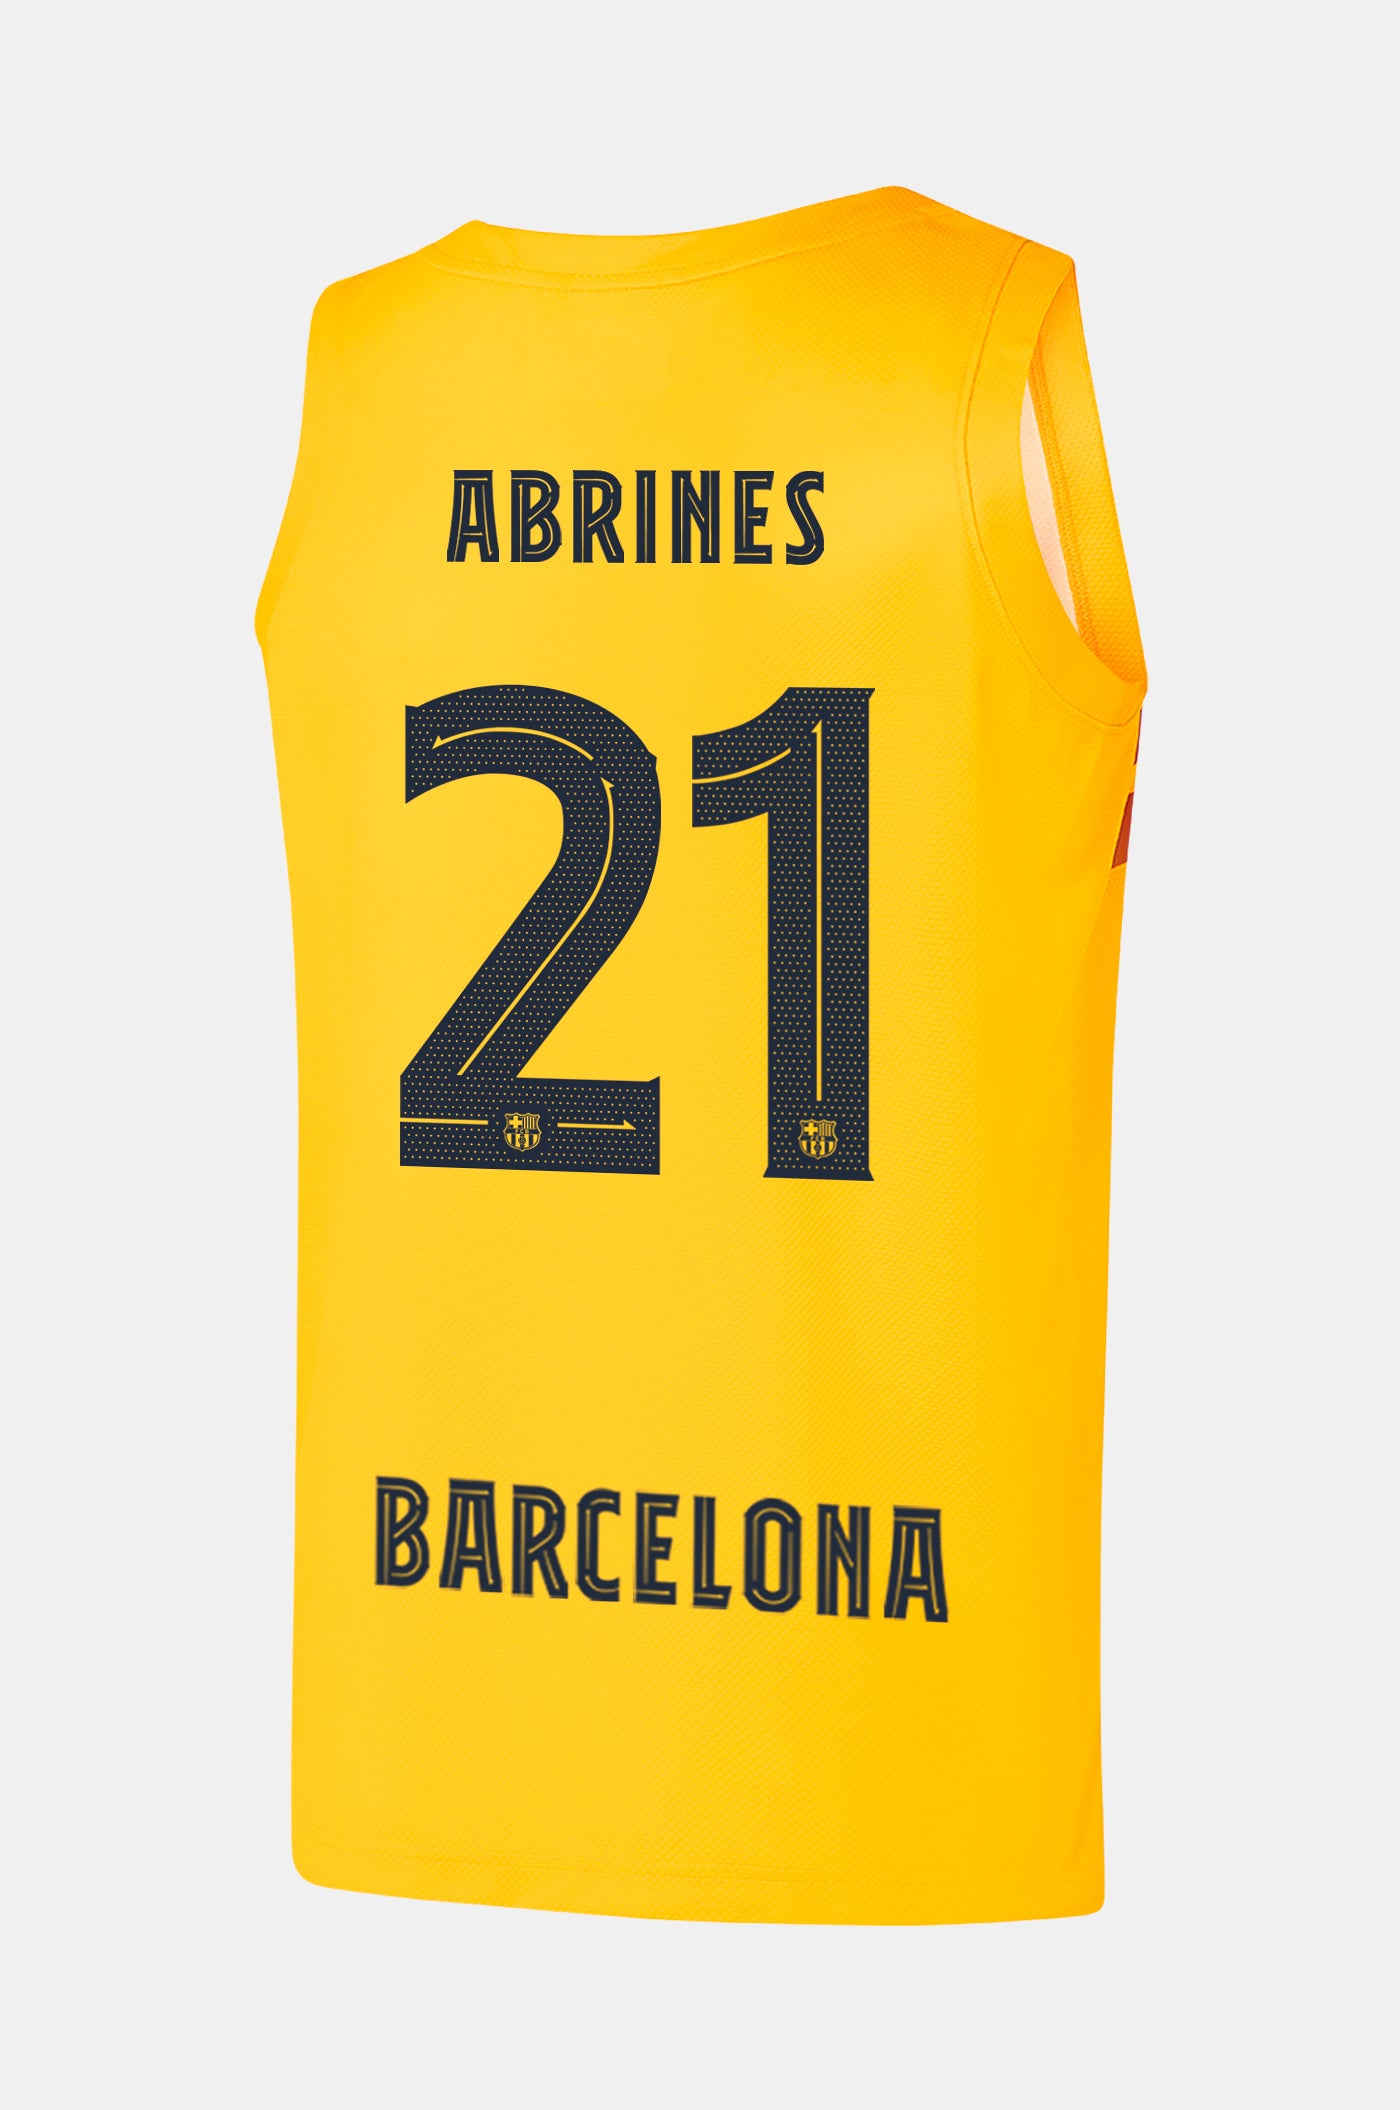 EUROLEAGUE - 4 Kit Basketball FC Barcelona 22/23 - ABRINES